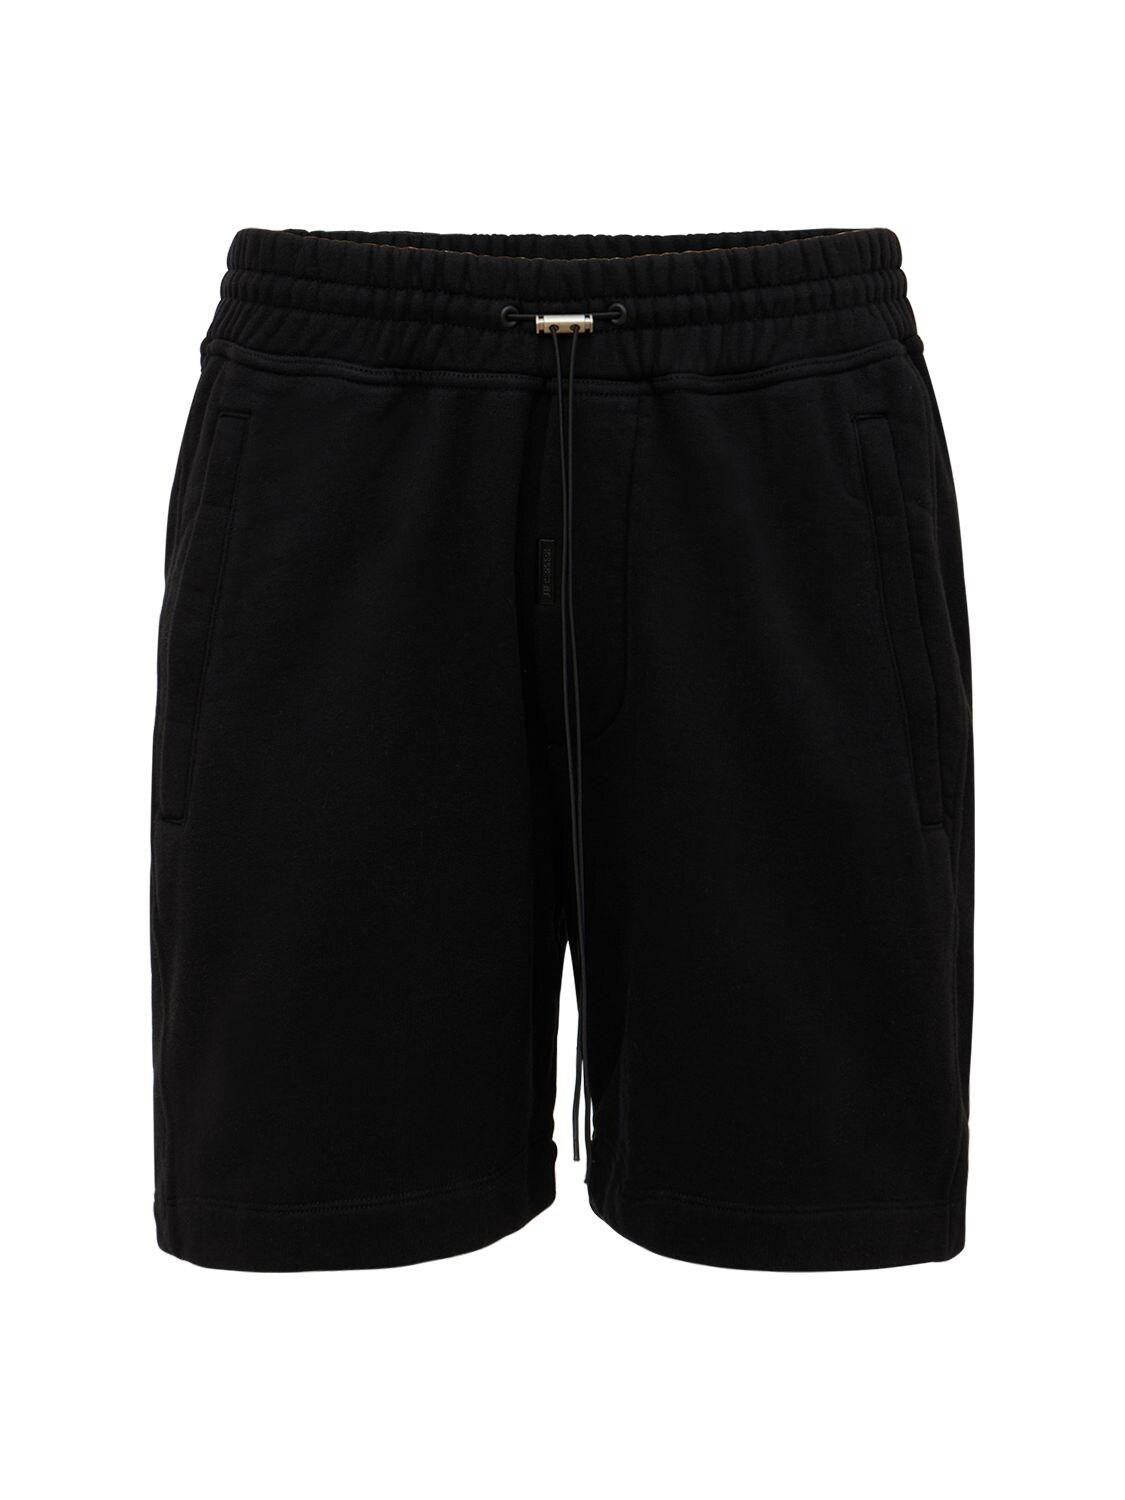 Represent Cotton Monochrome Blank Shorts in Black for Men | Lyst